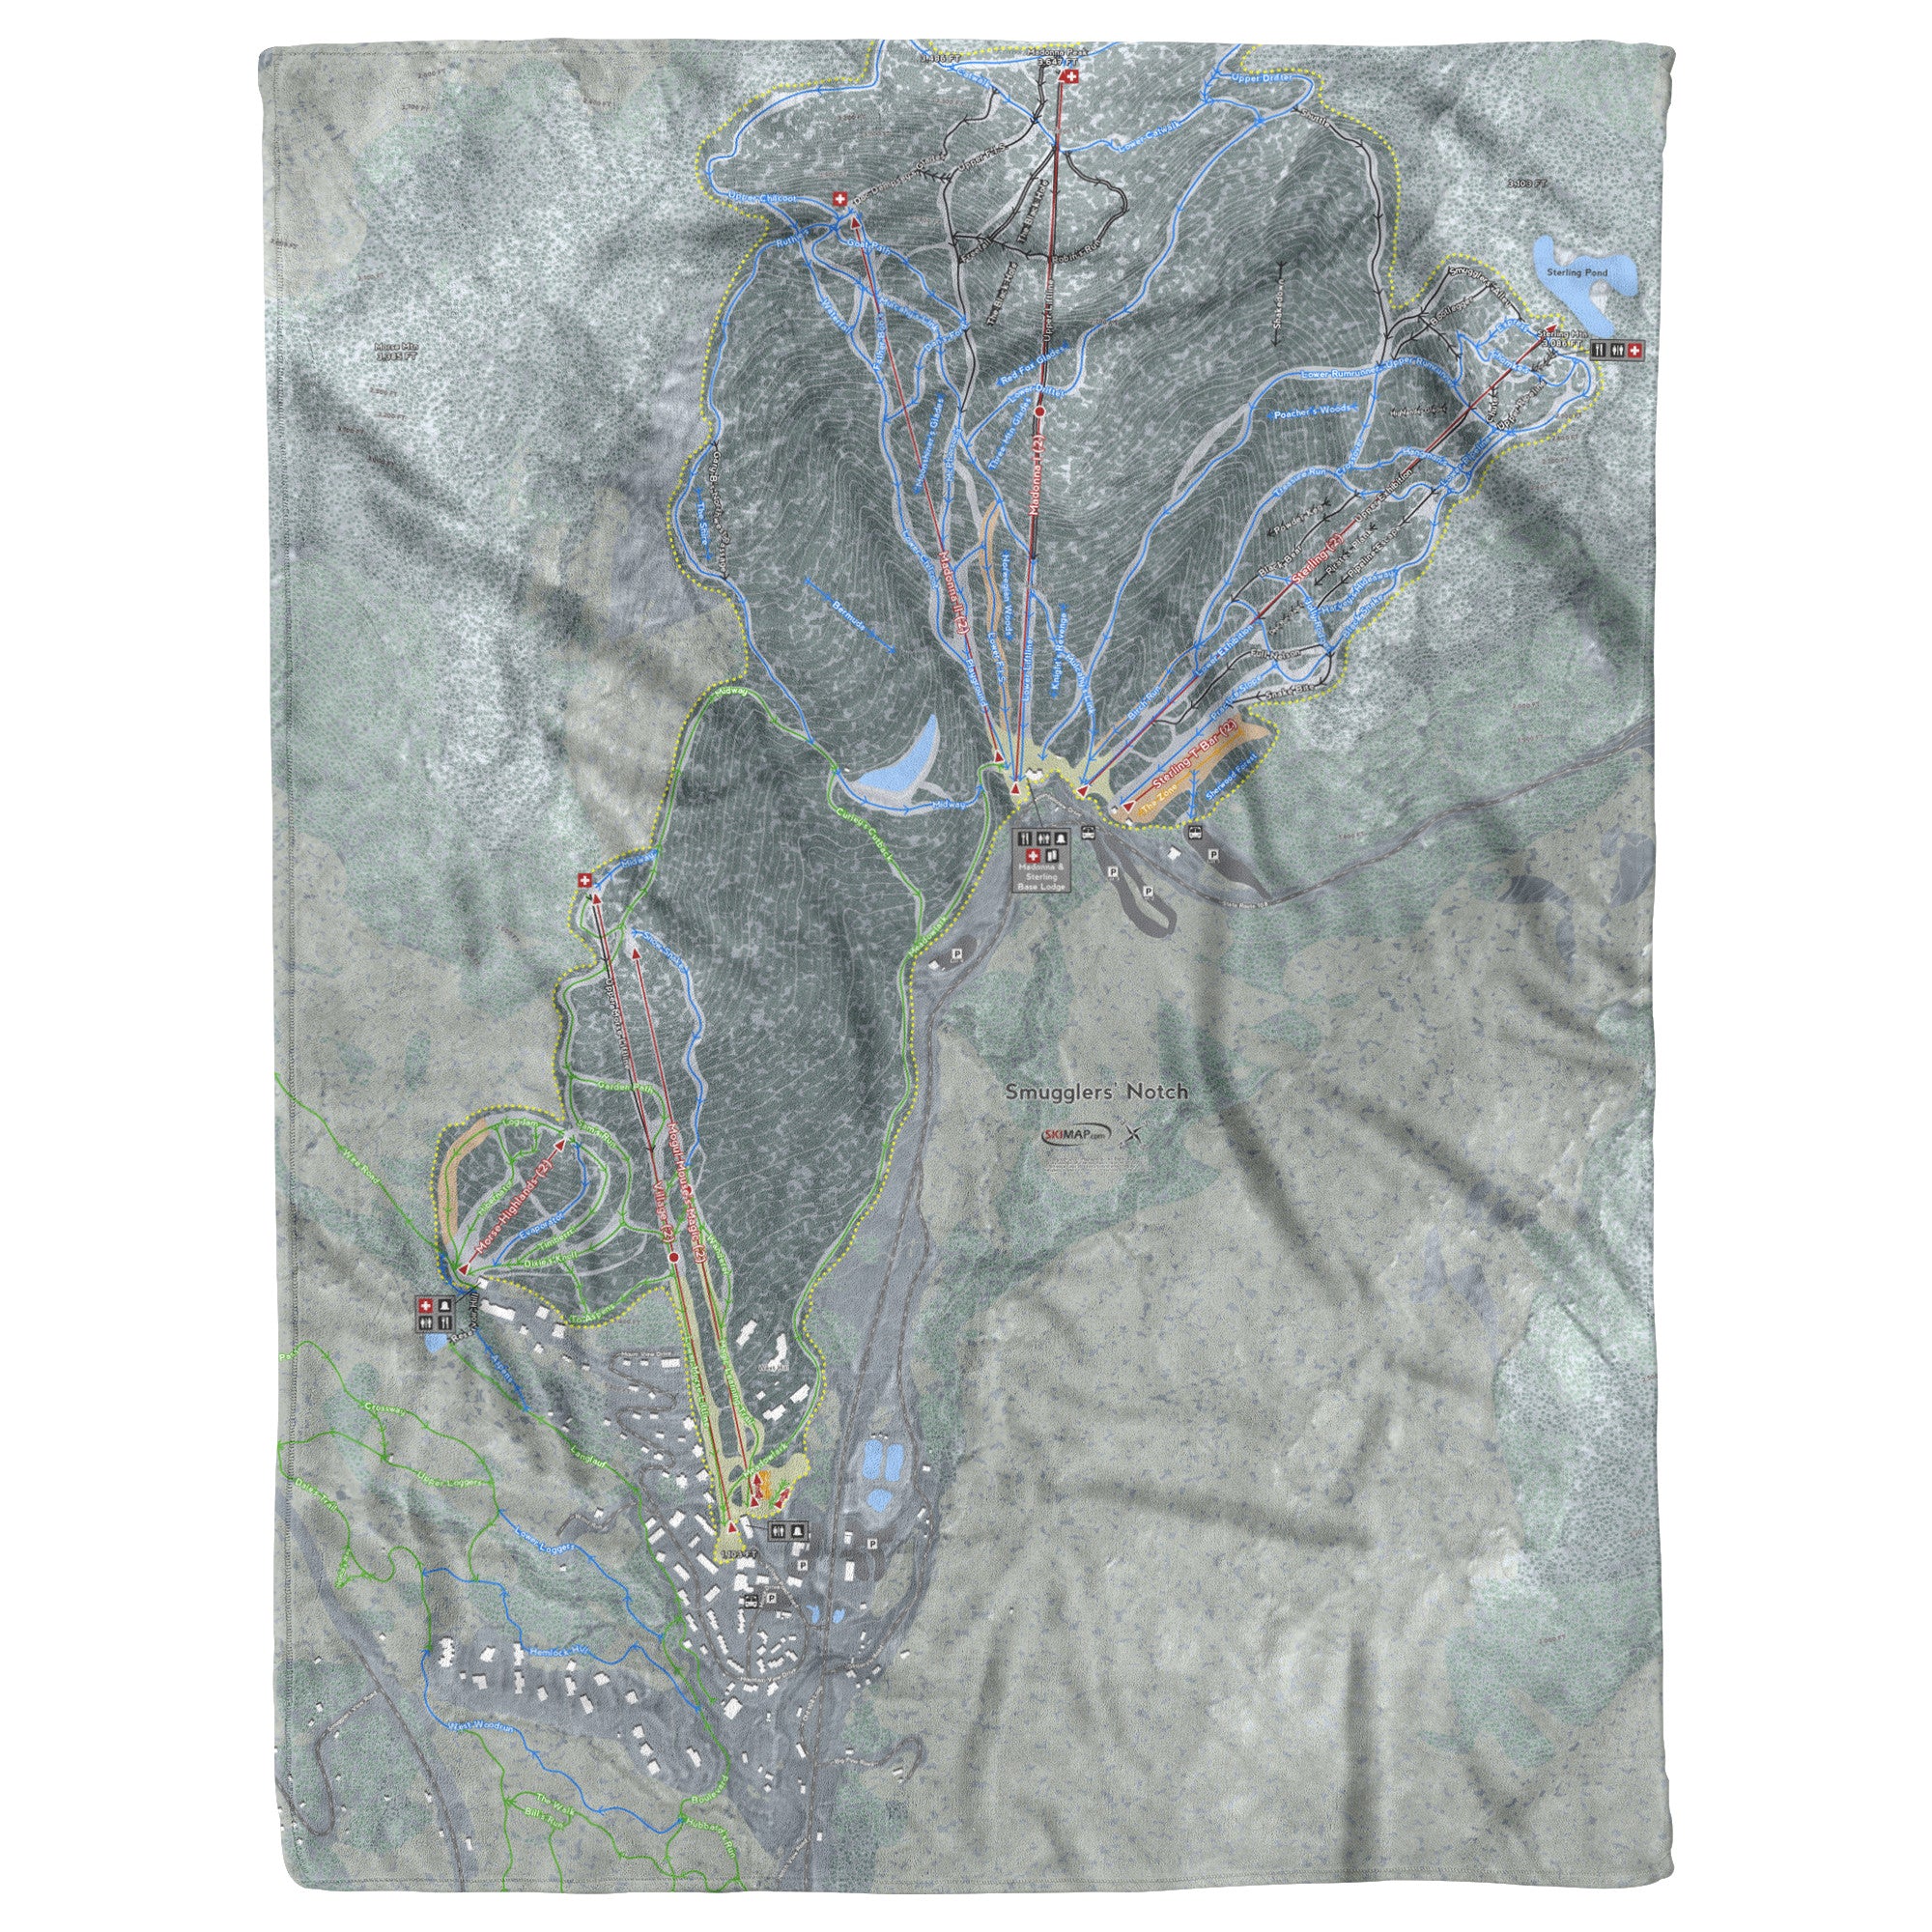 Smuggler's Notch, Vermont Ski Resort Map Blanket